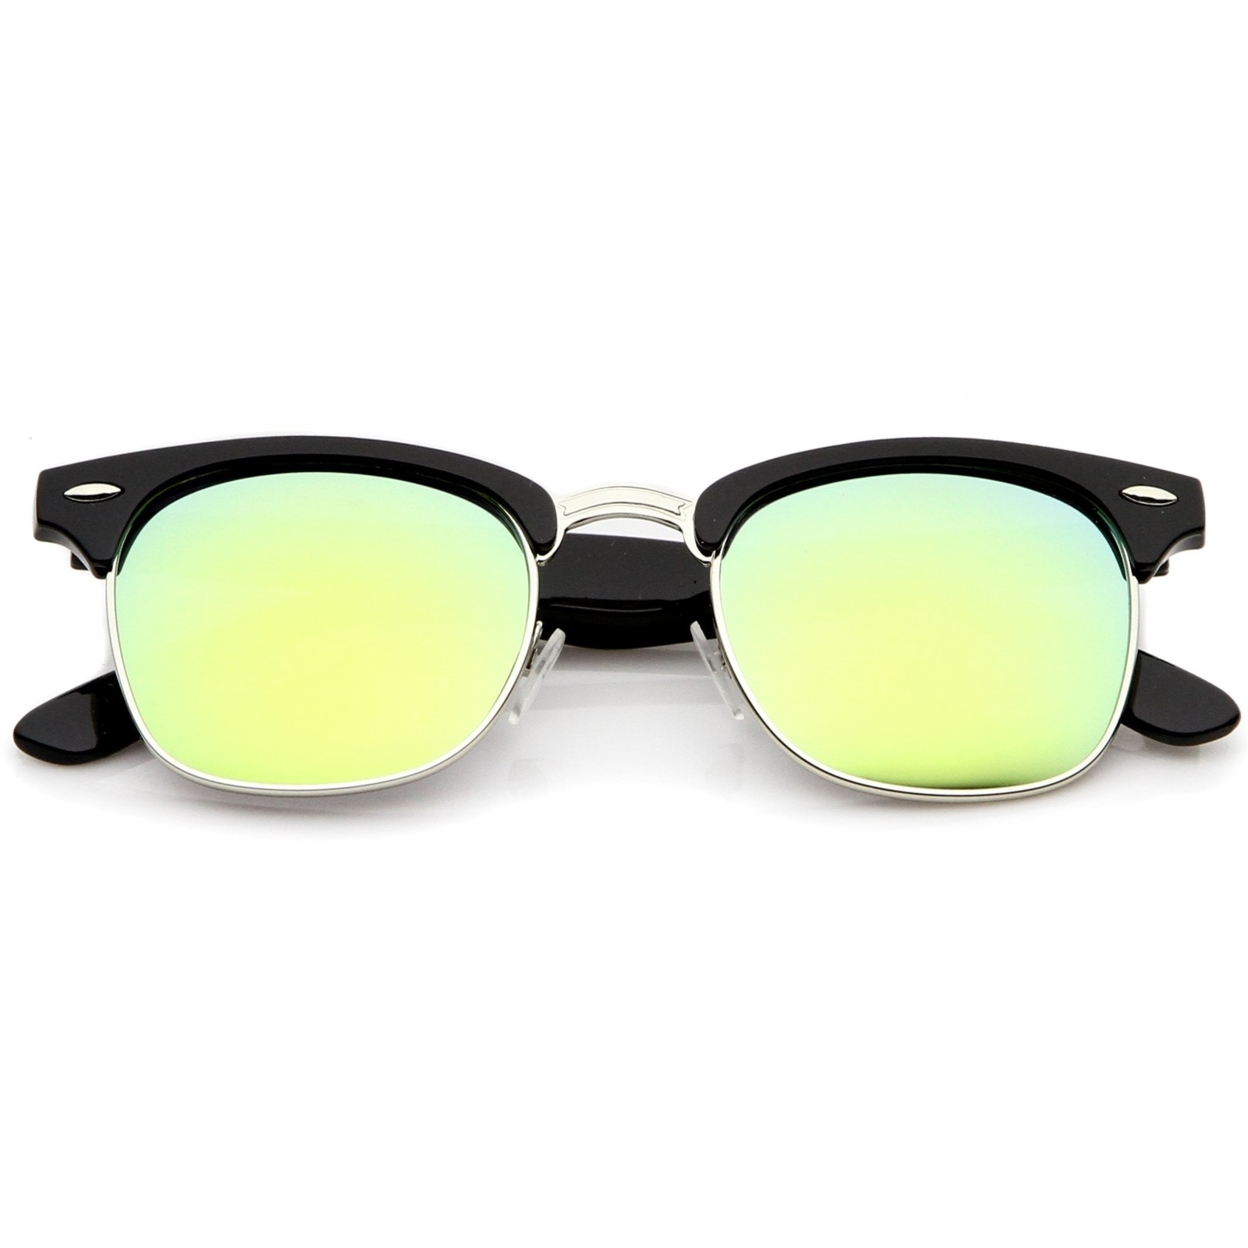 Premium Half Frame Colored Mirror Lens Horn Rimmed Sunglasses 50mm - Tortoise-Gold / Blue Mirror